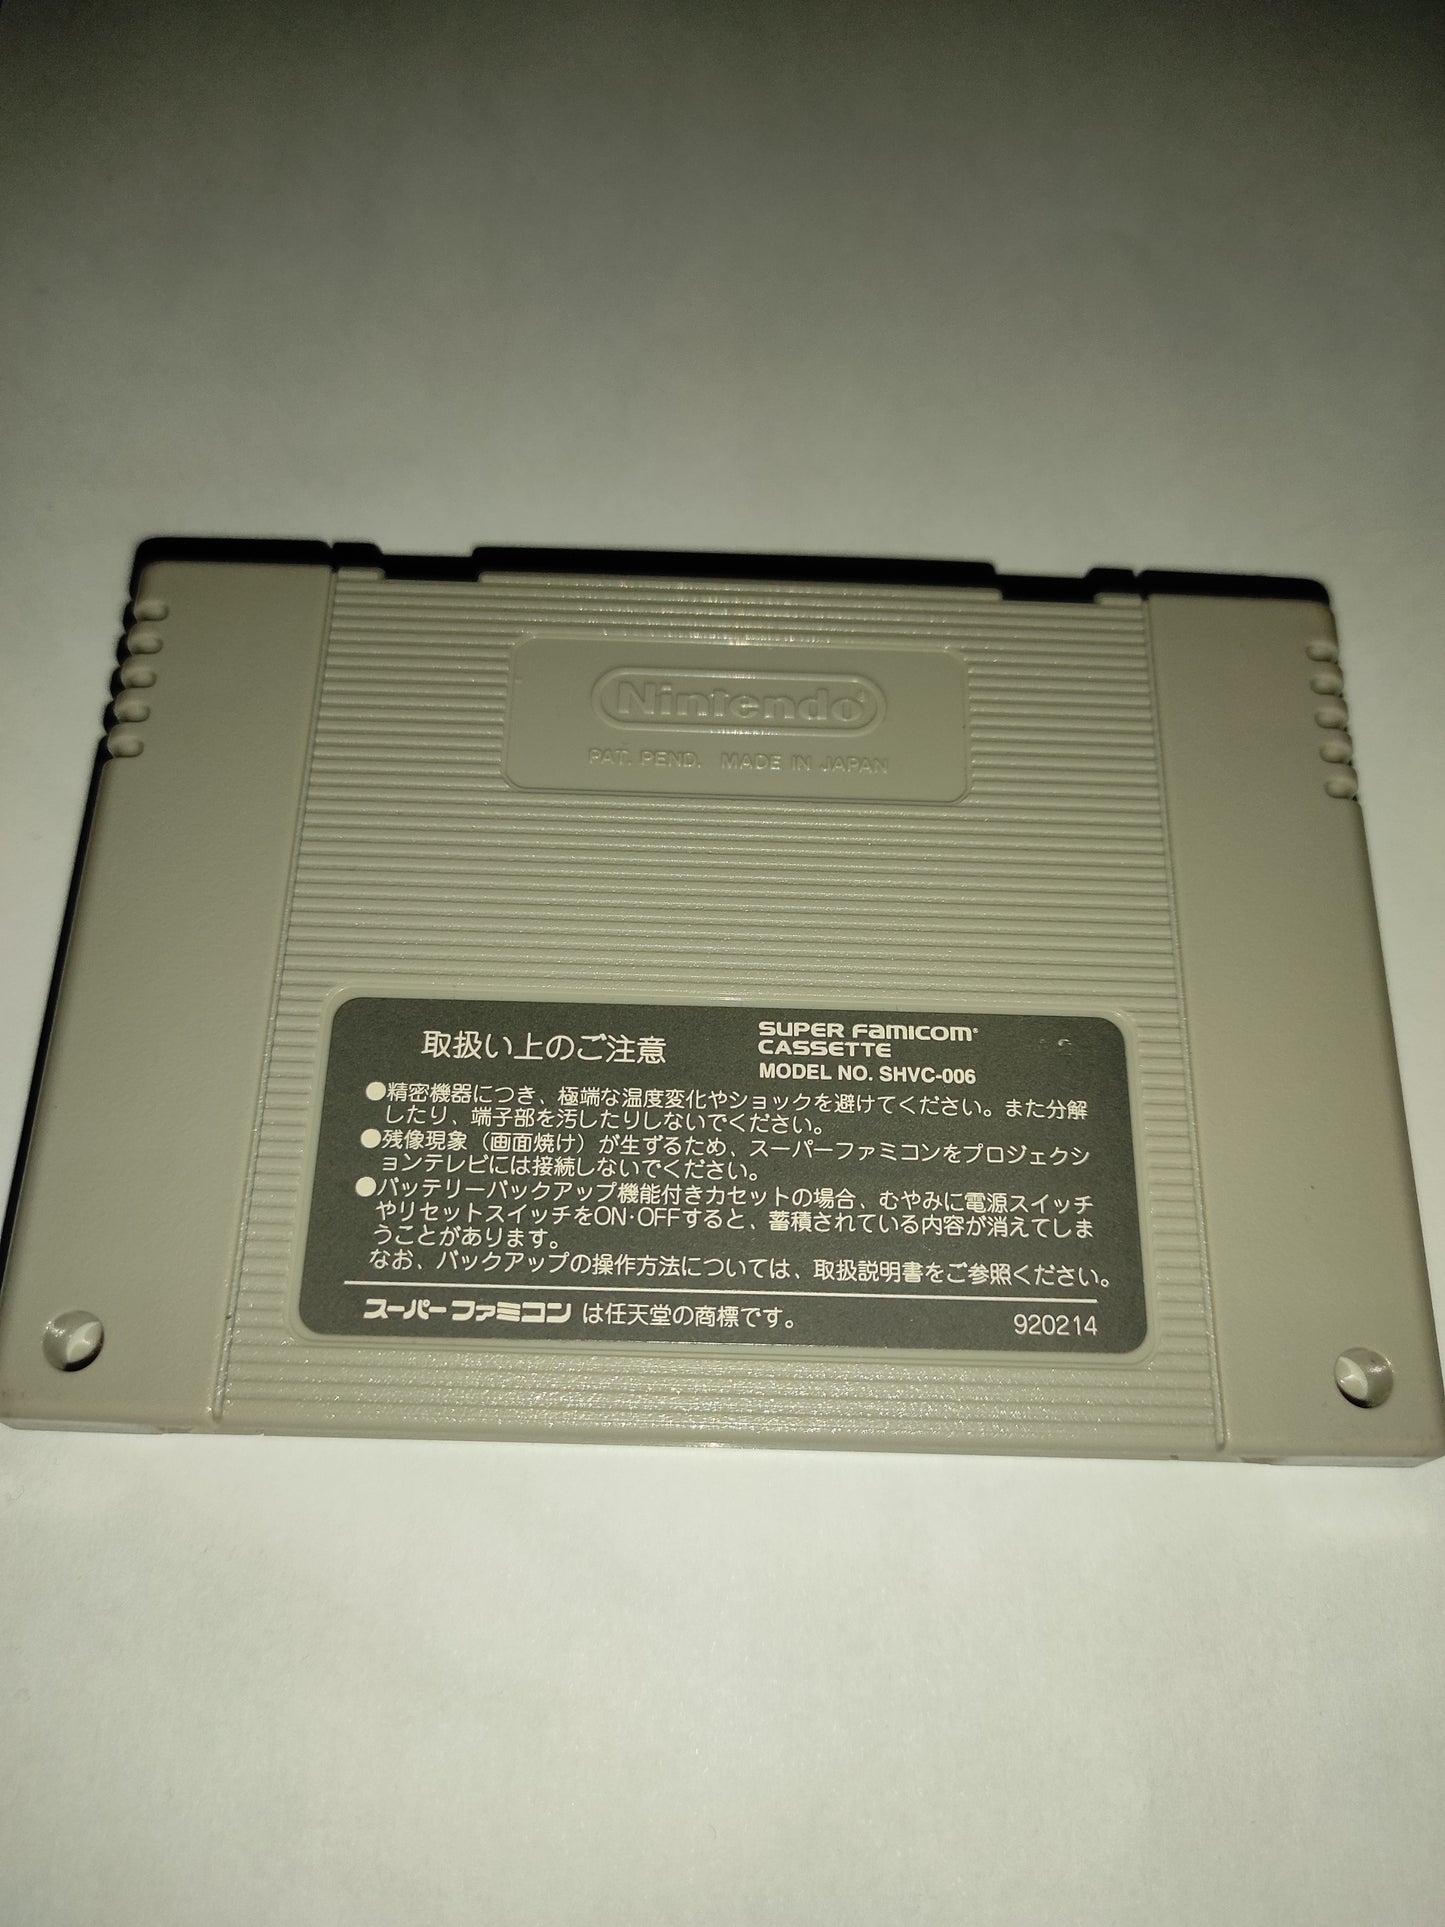 Gioco Nintendo Famicom Jap wonder project